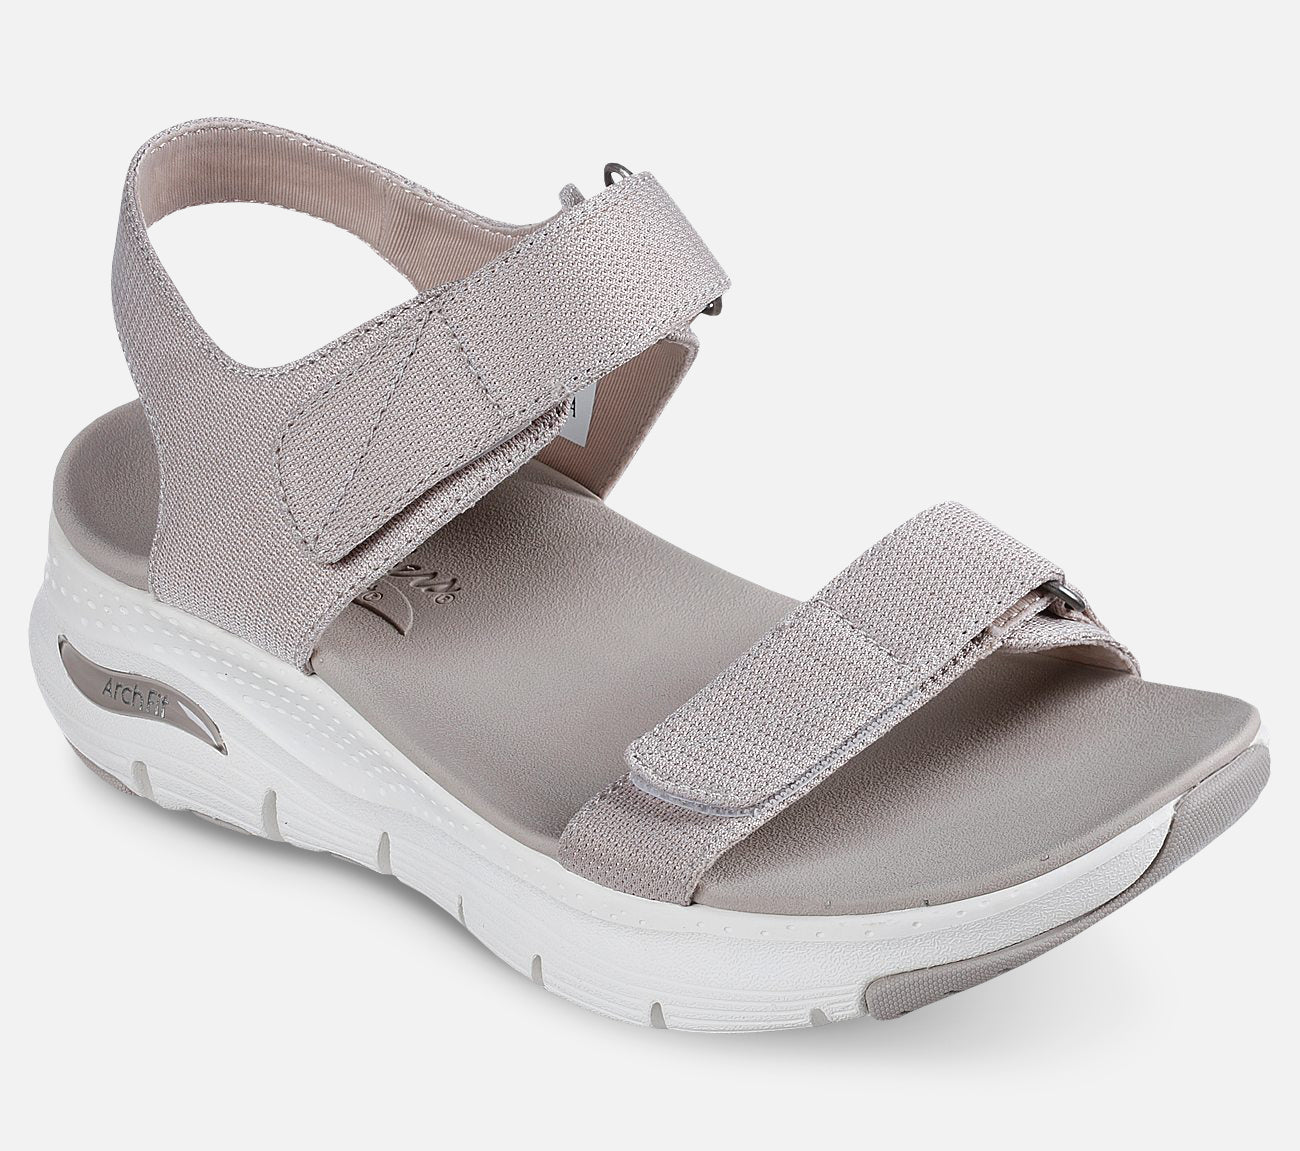 Arch Fit - Touristy Sandal Skechers